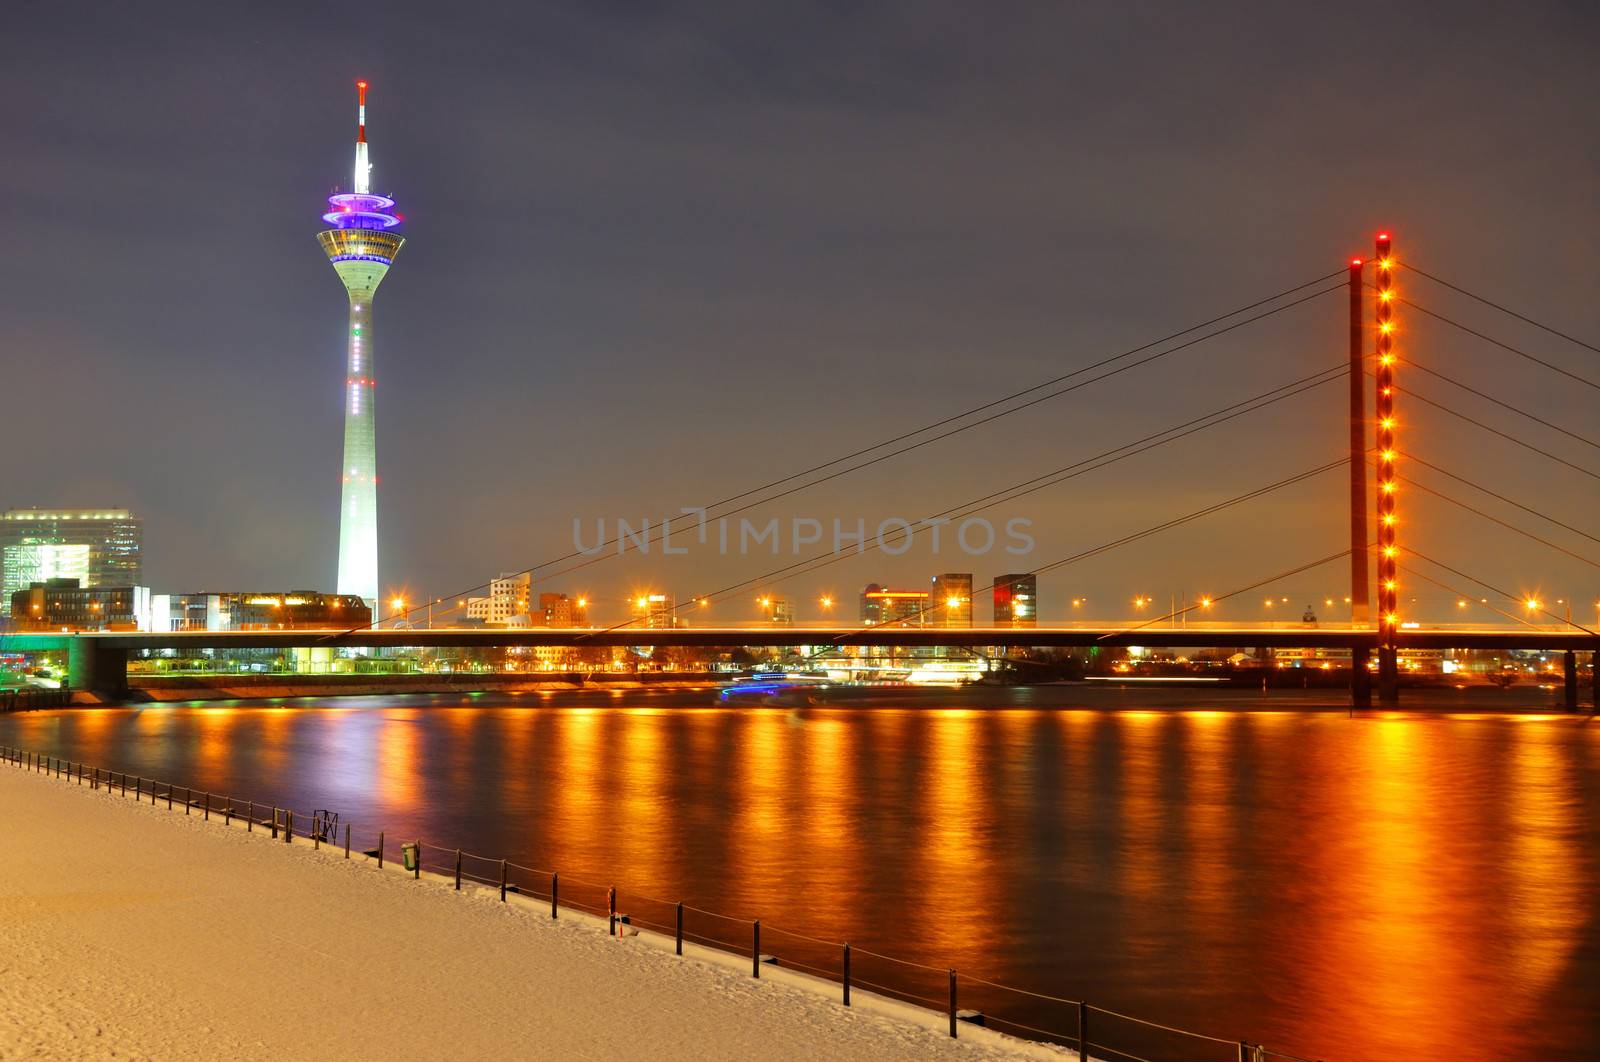 Beautiful night shore of Rhein river at night in Dusseldorf with a Rheinturm tower and a bridge, Nordrhein-Westfalen, Germany